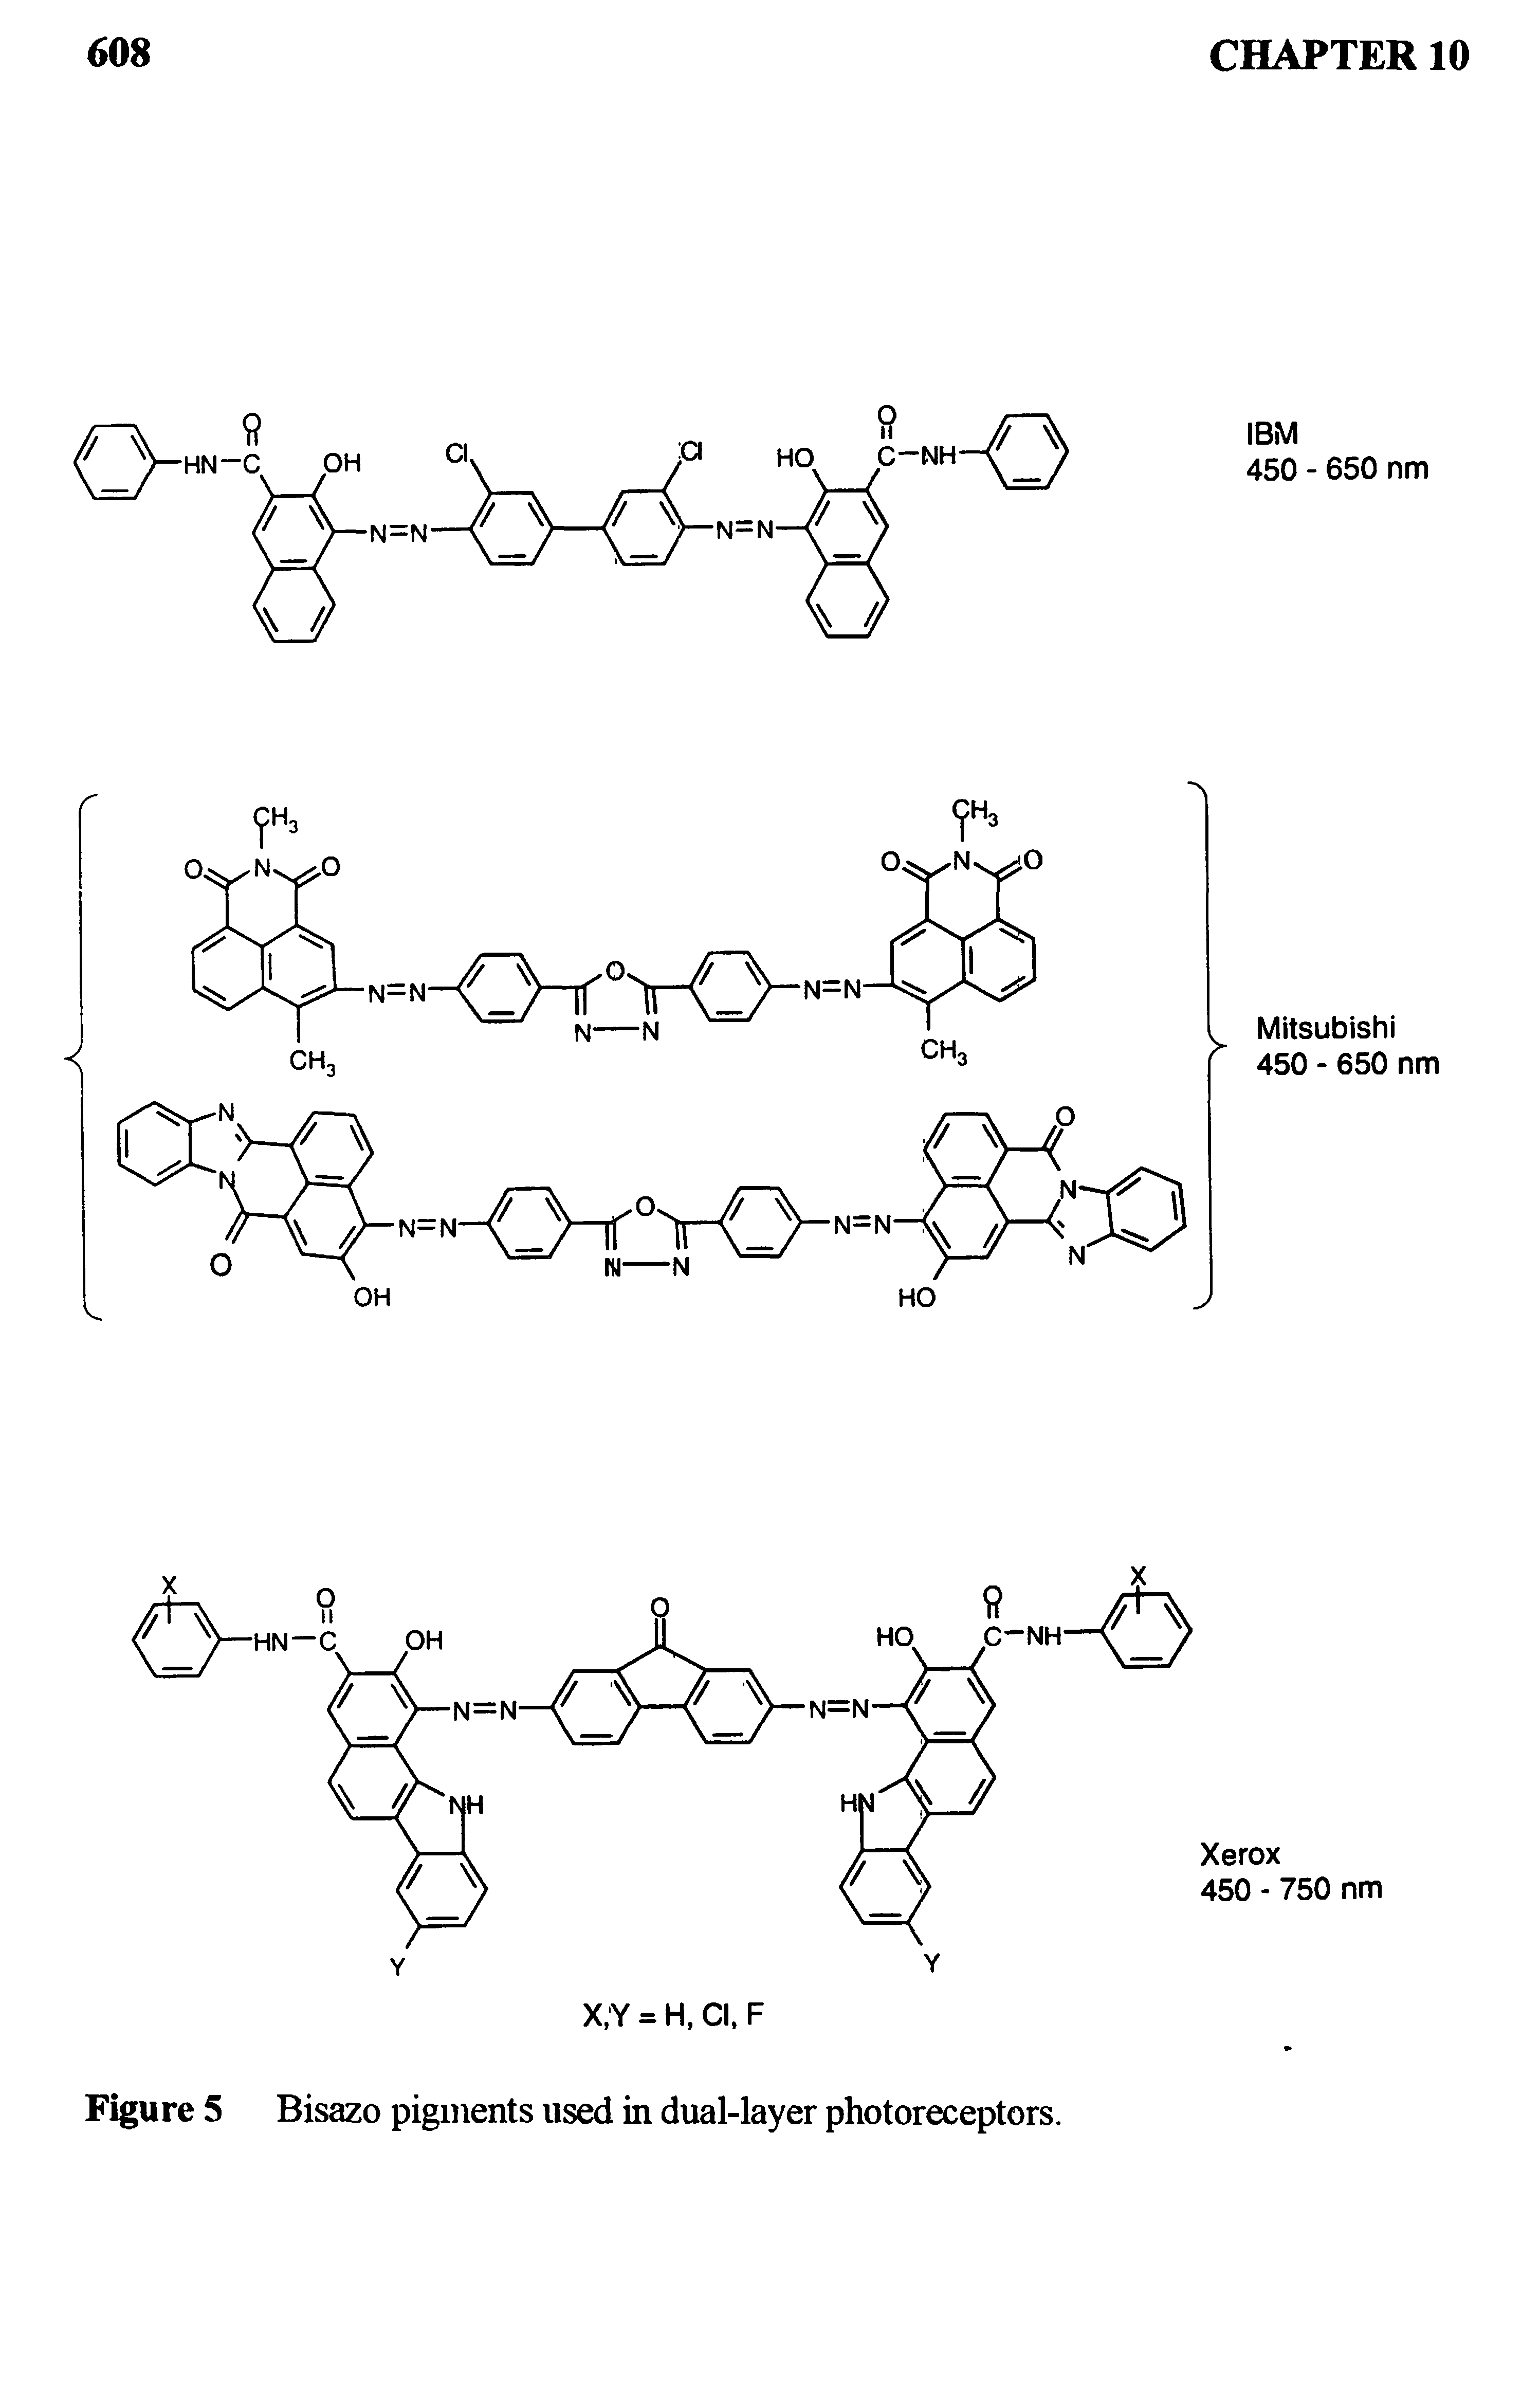 Figure 5 Bisazo pigments used in dual-layer photoreceptors.